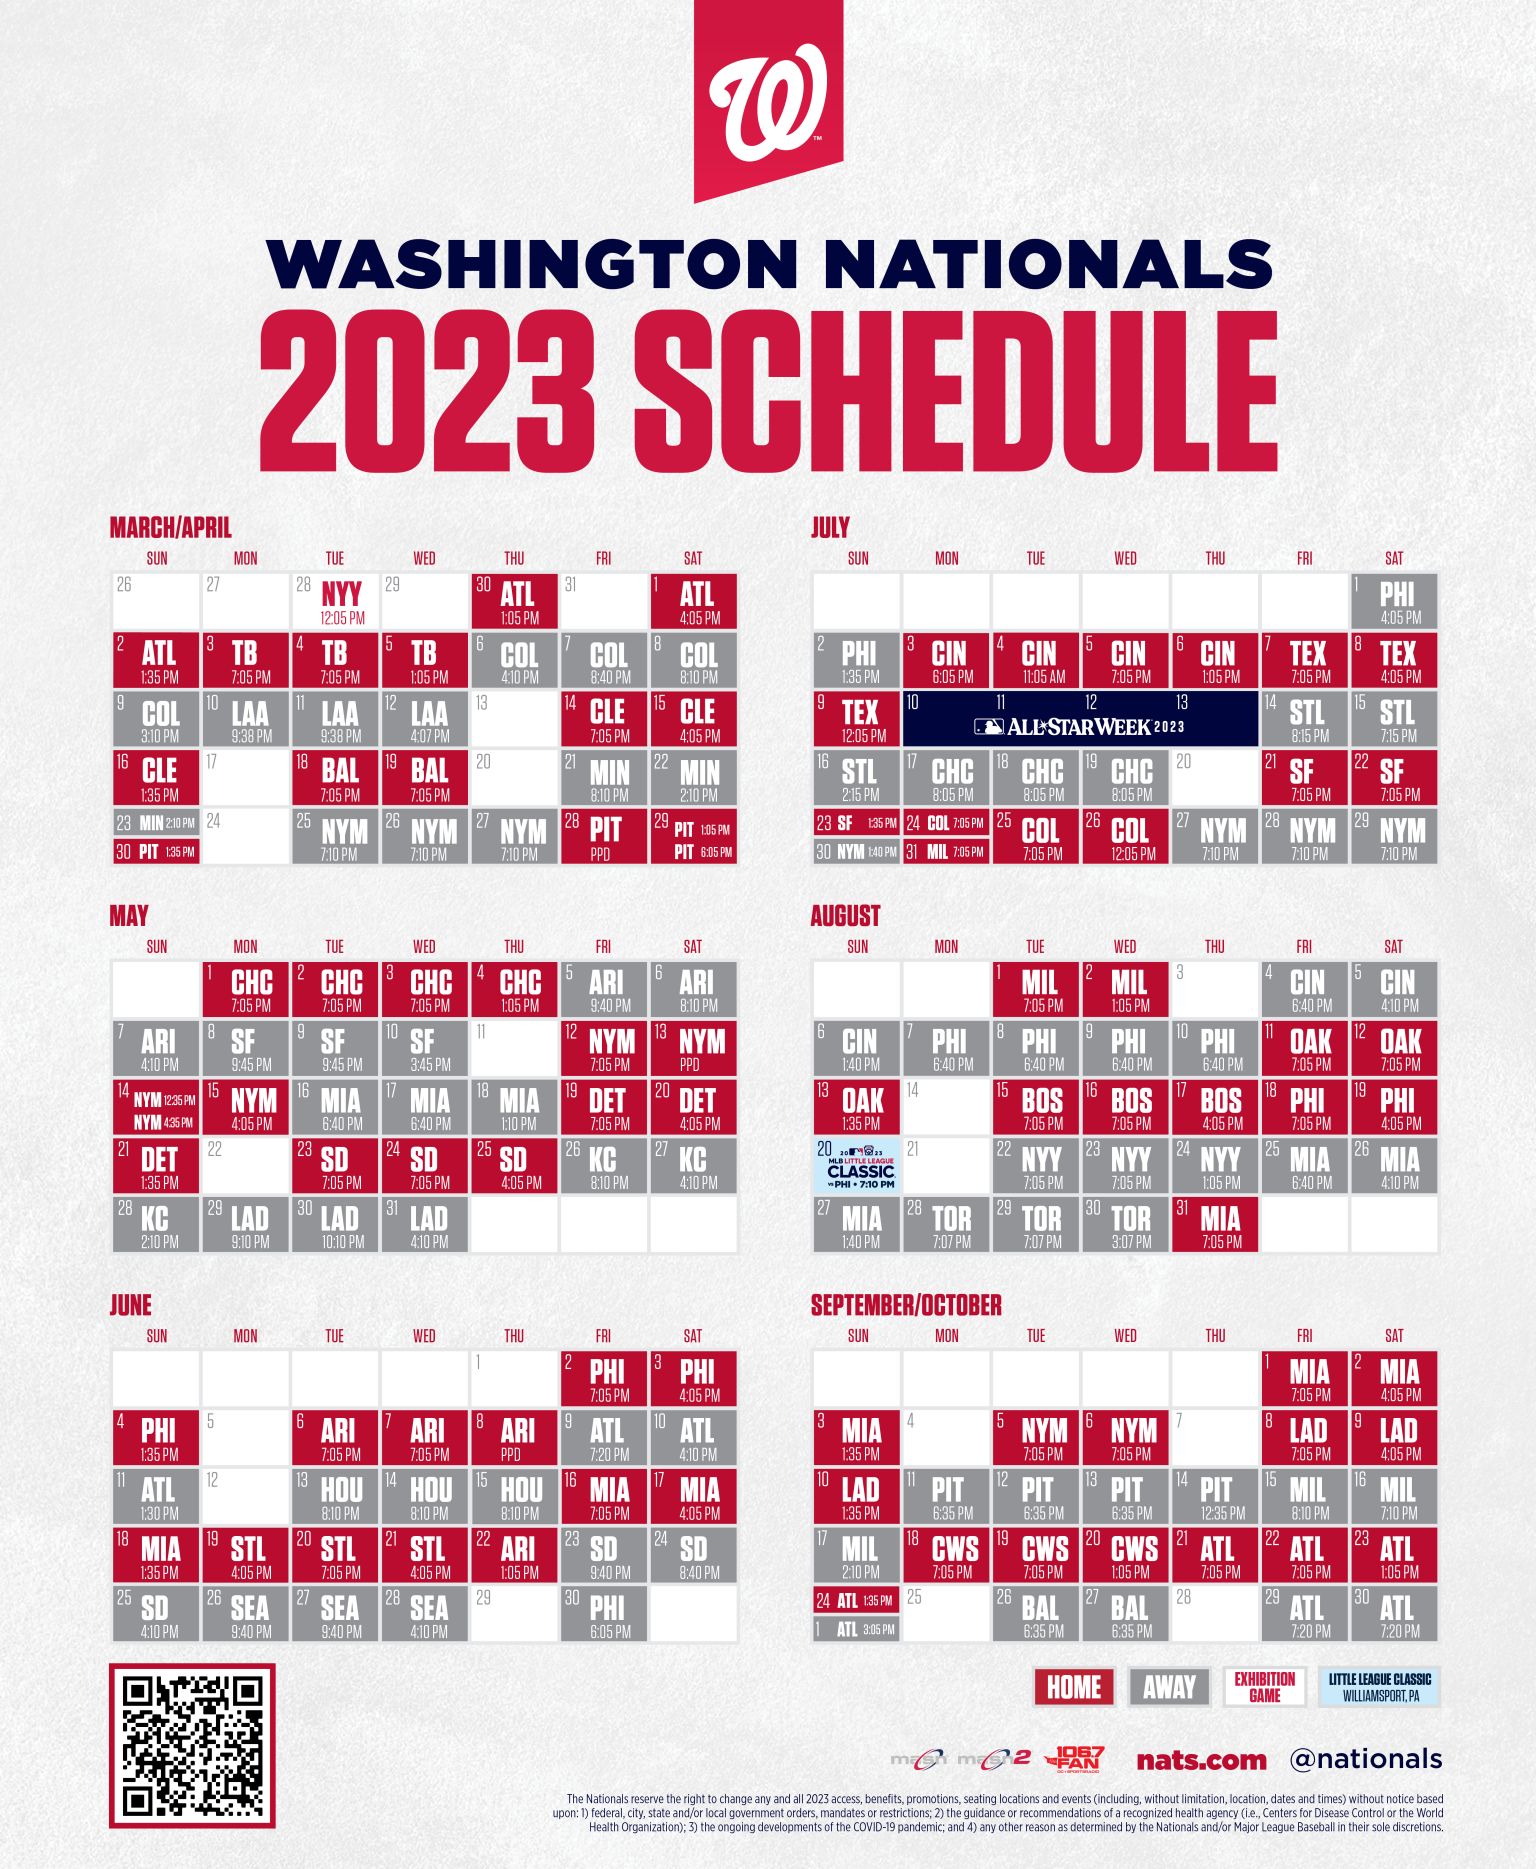 Washington Nationals release their 2023 game schedule!